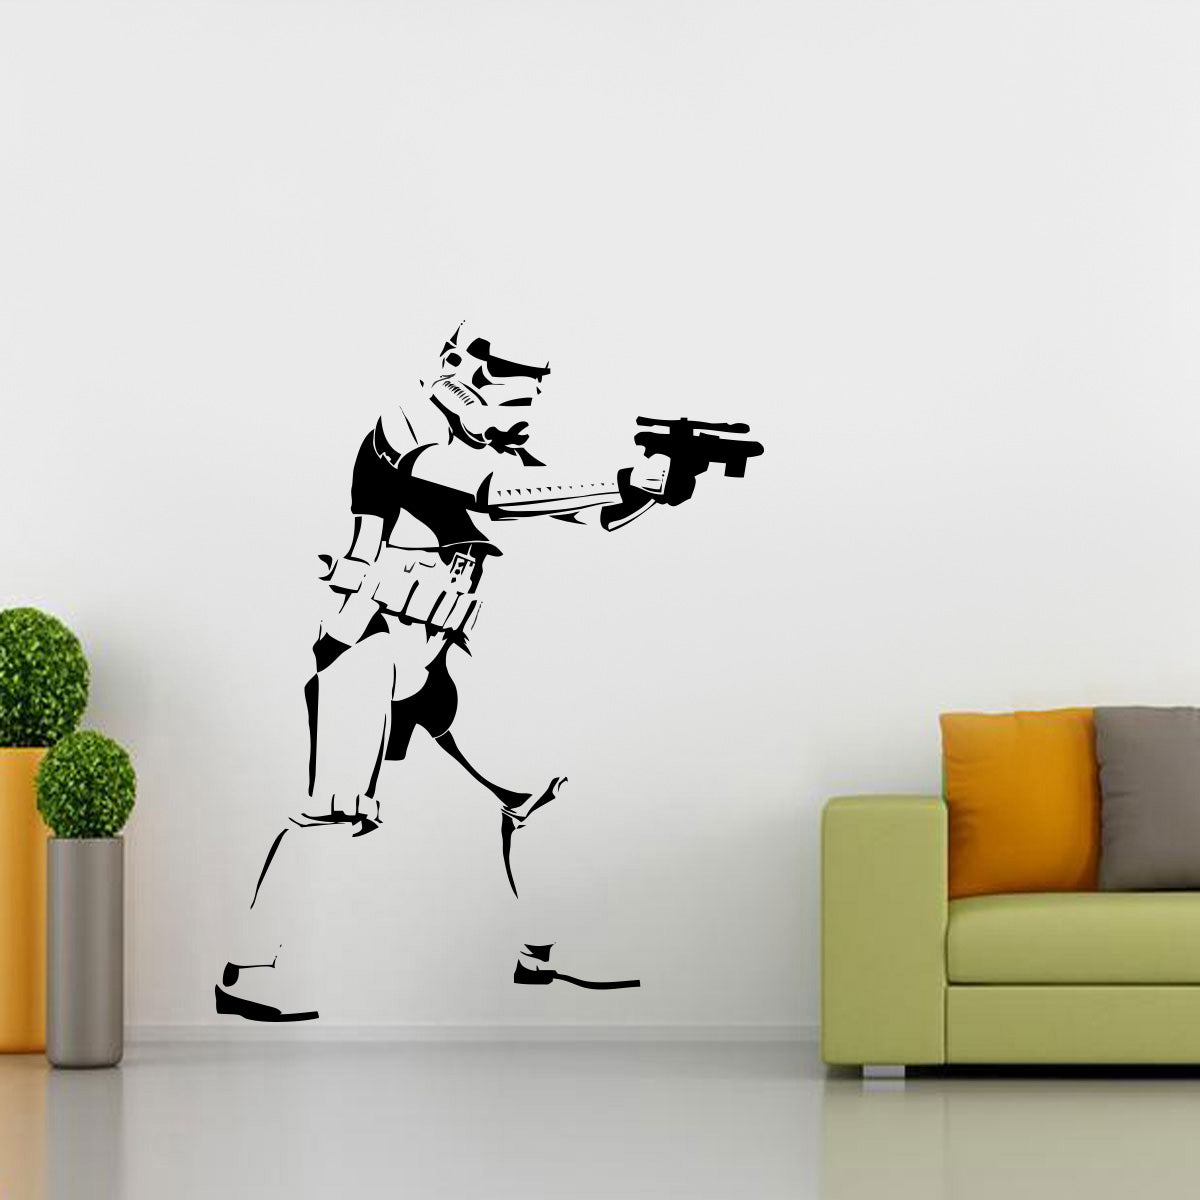 Stormtrooper Star Wars Wall Sticker Silhouette ST168 Decal Stencil